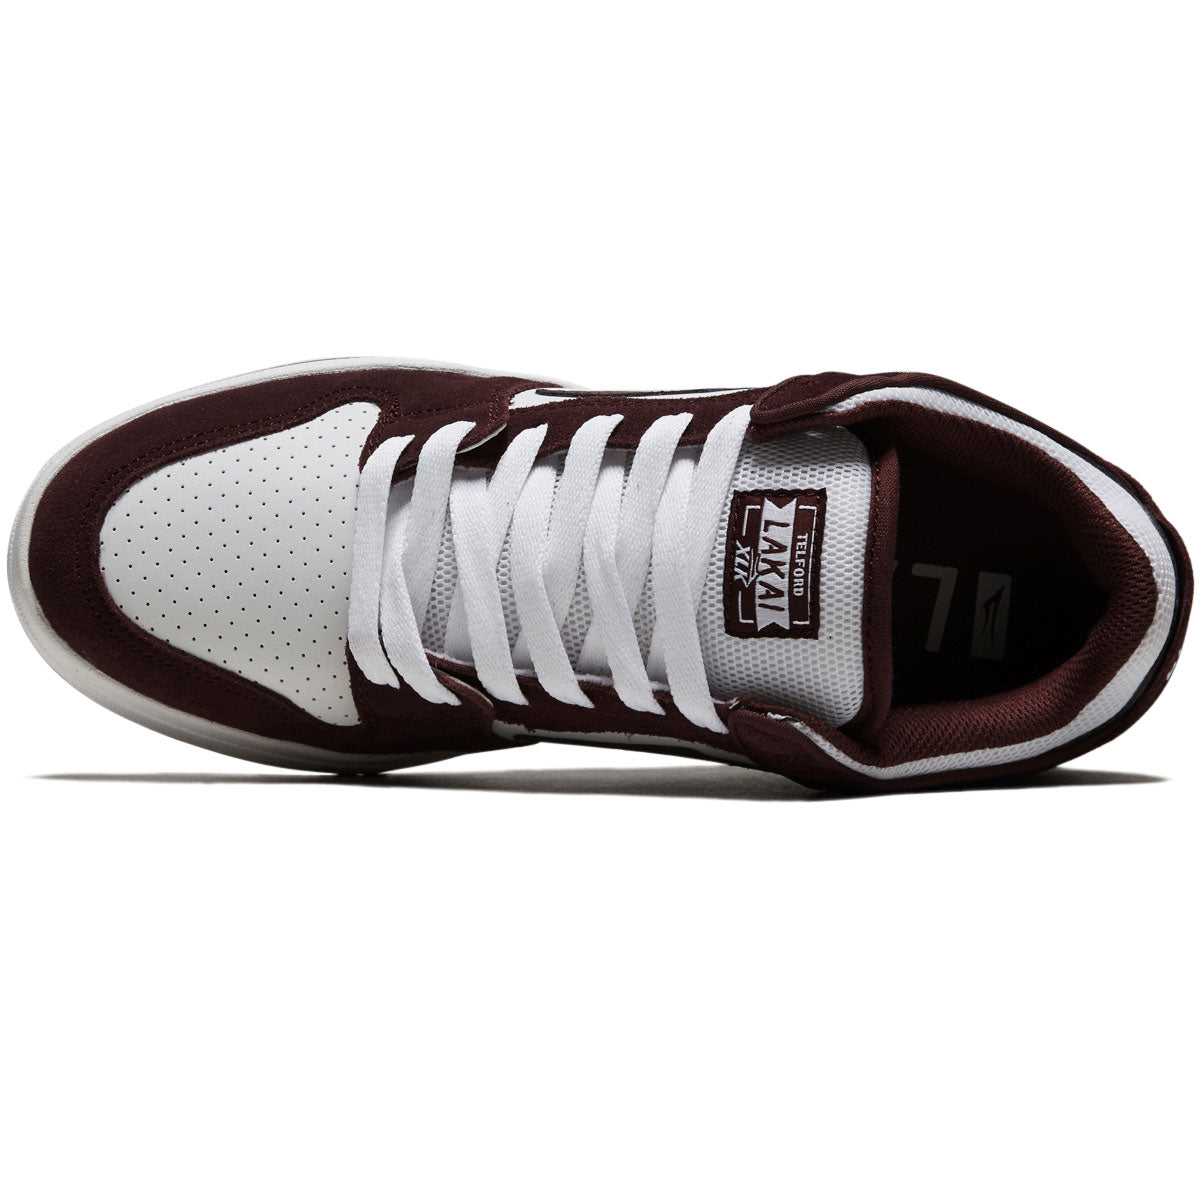 Lakai Telford Low Shoes - Burgundy/White Suede image 3